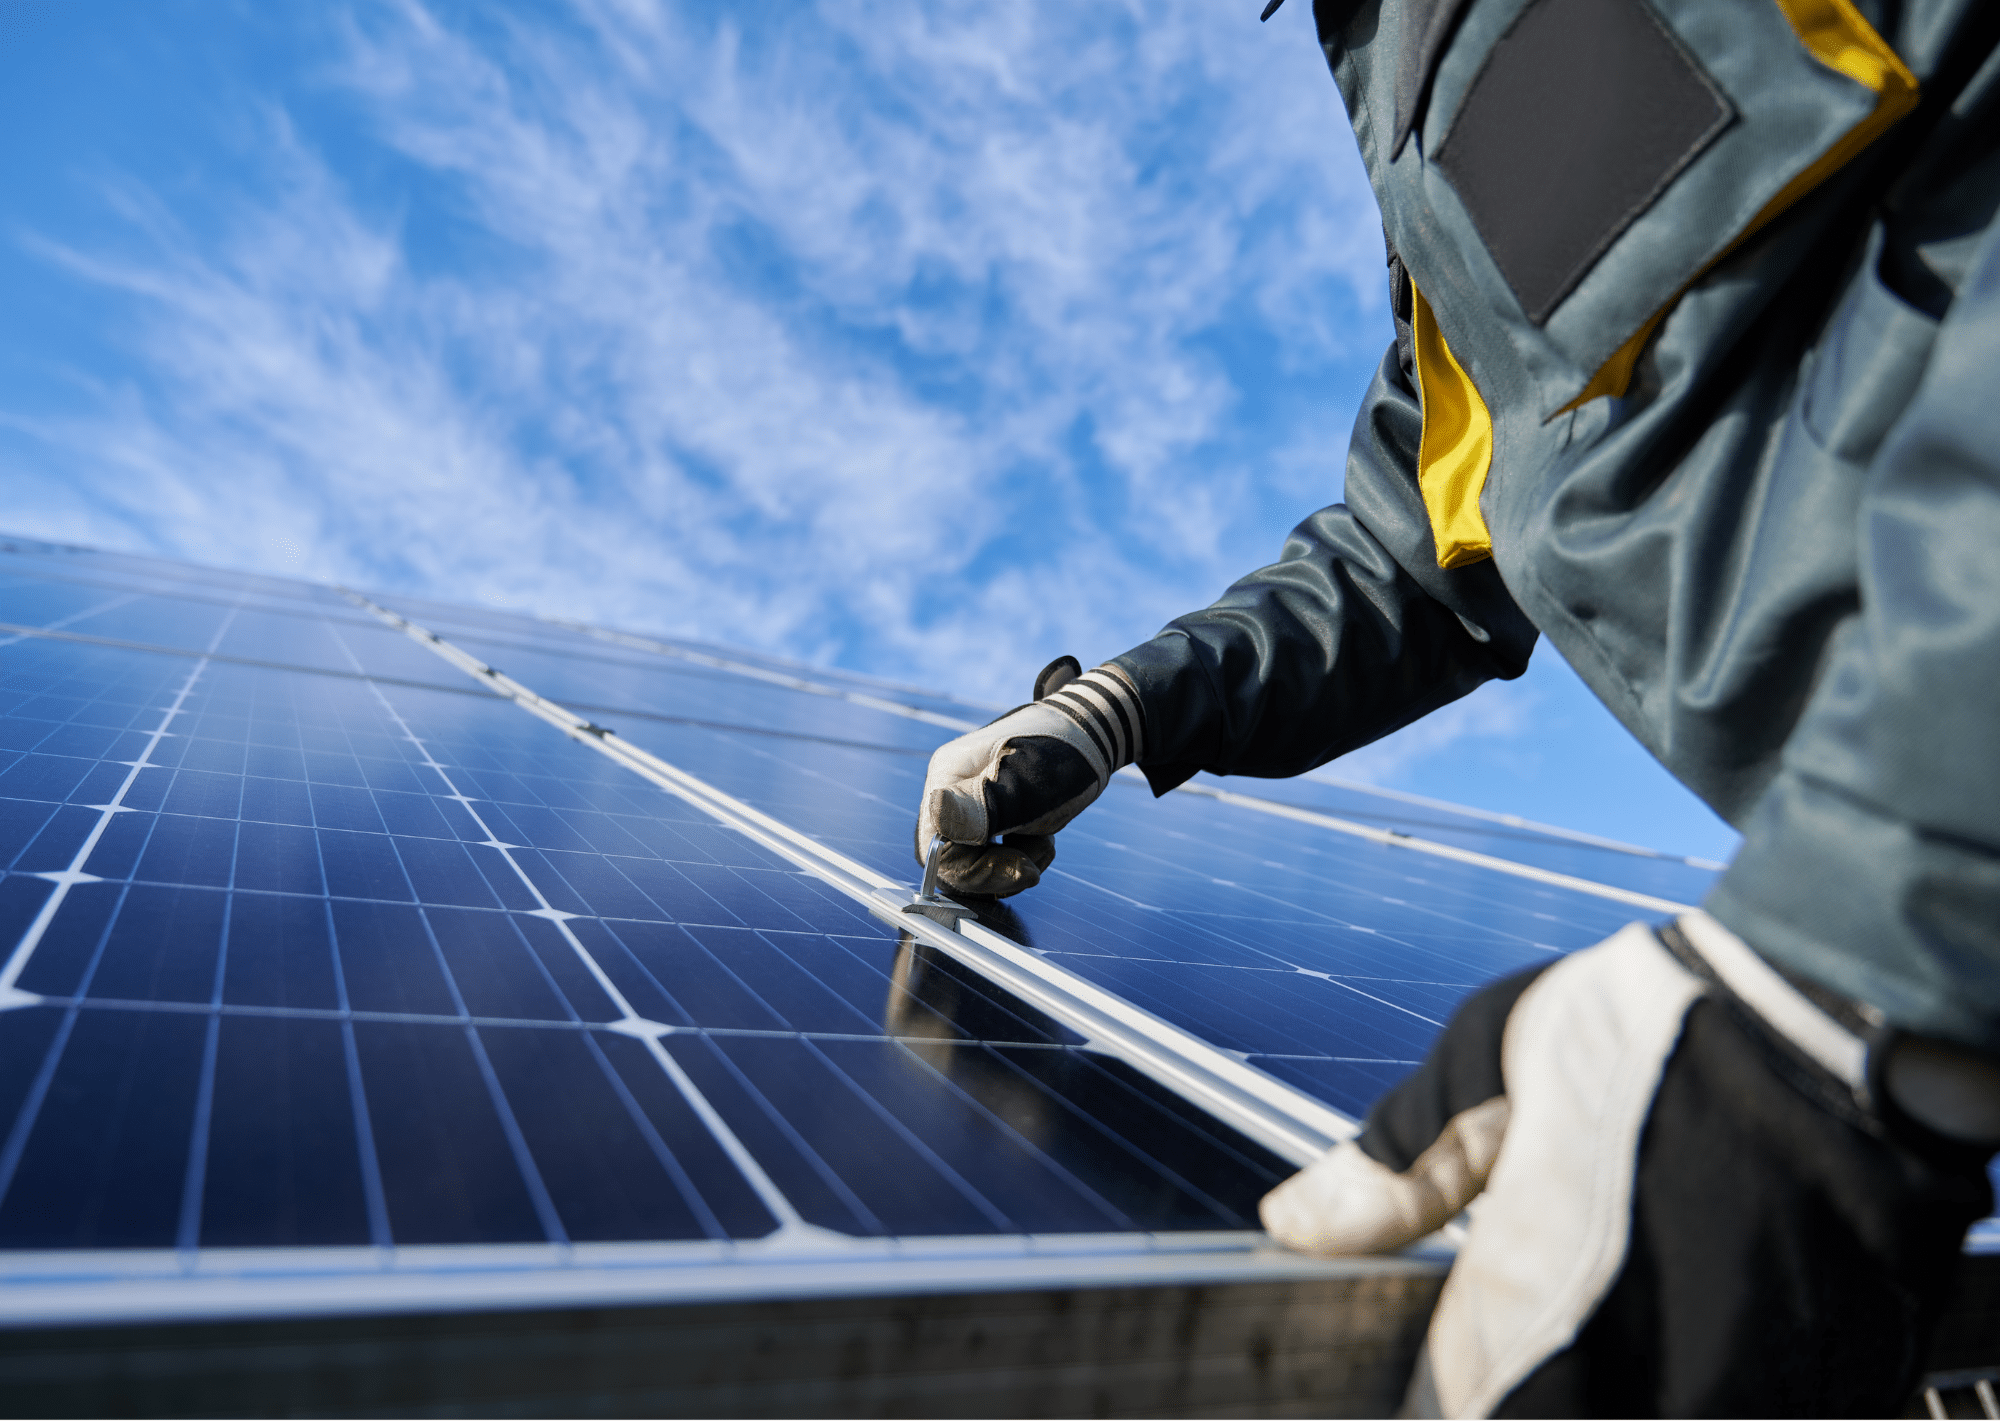 What jobs does solar energy create